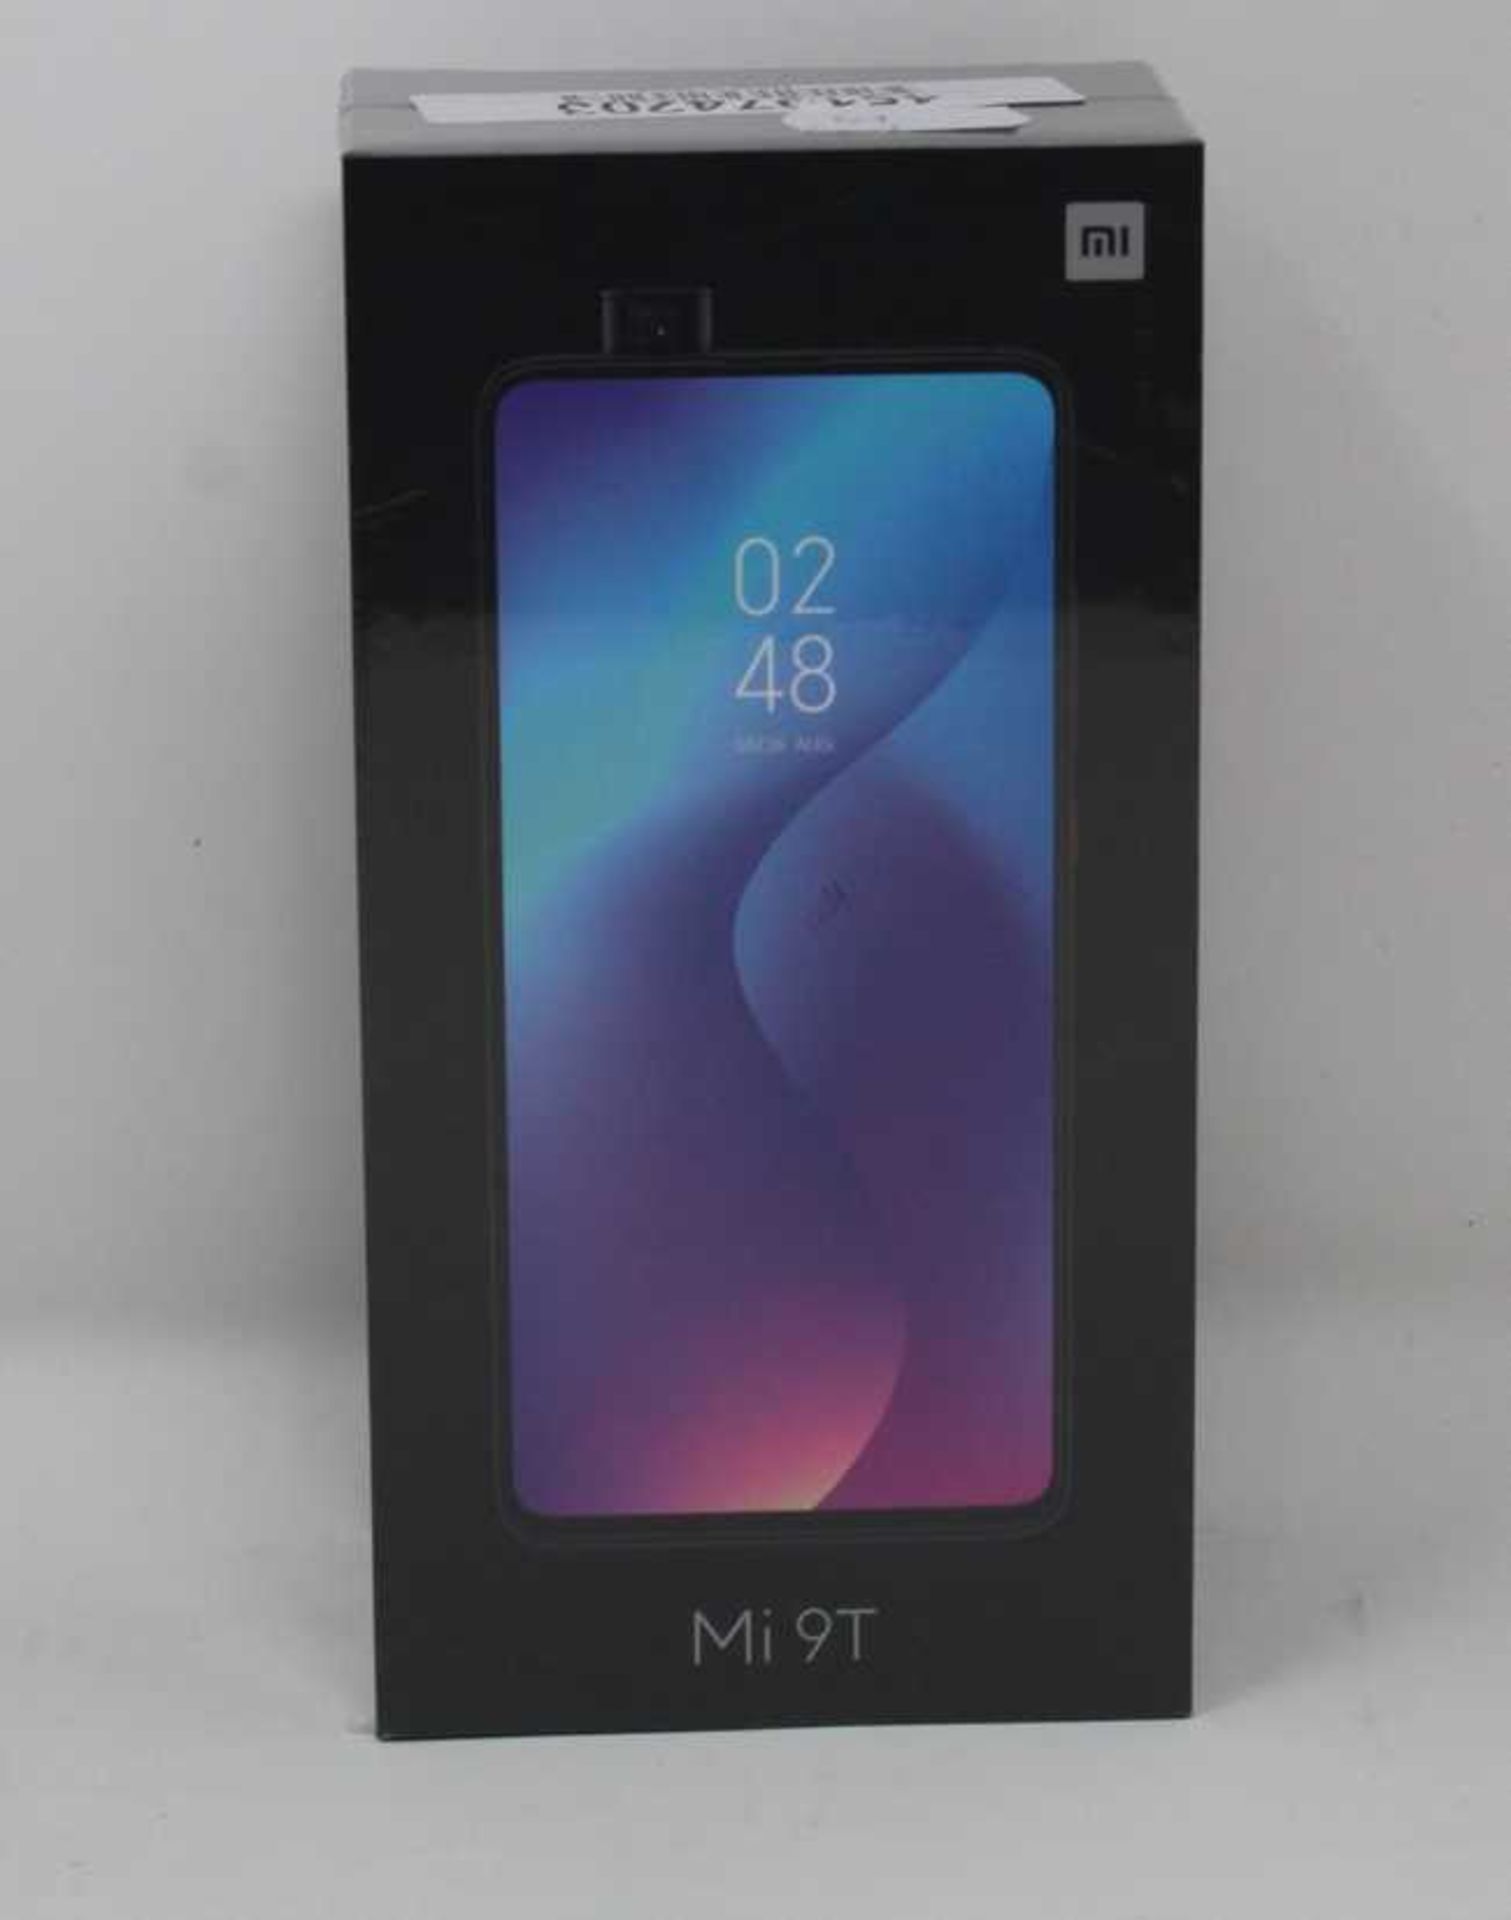 A boxed as new Xiaomi Mi 9T 6GB RAM 128GB Storage Android Smartphone in Glacier Blue (Box sealed,